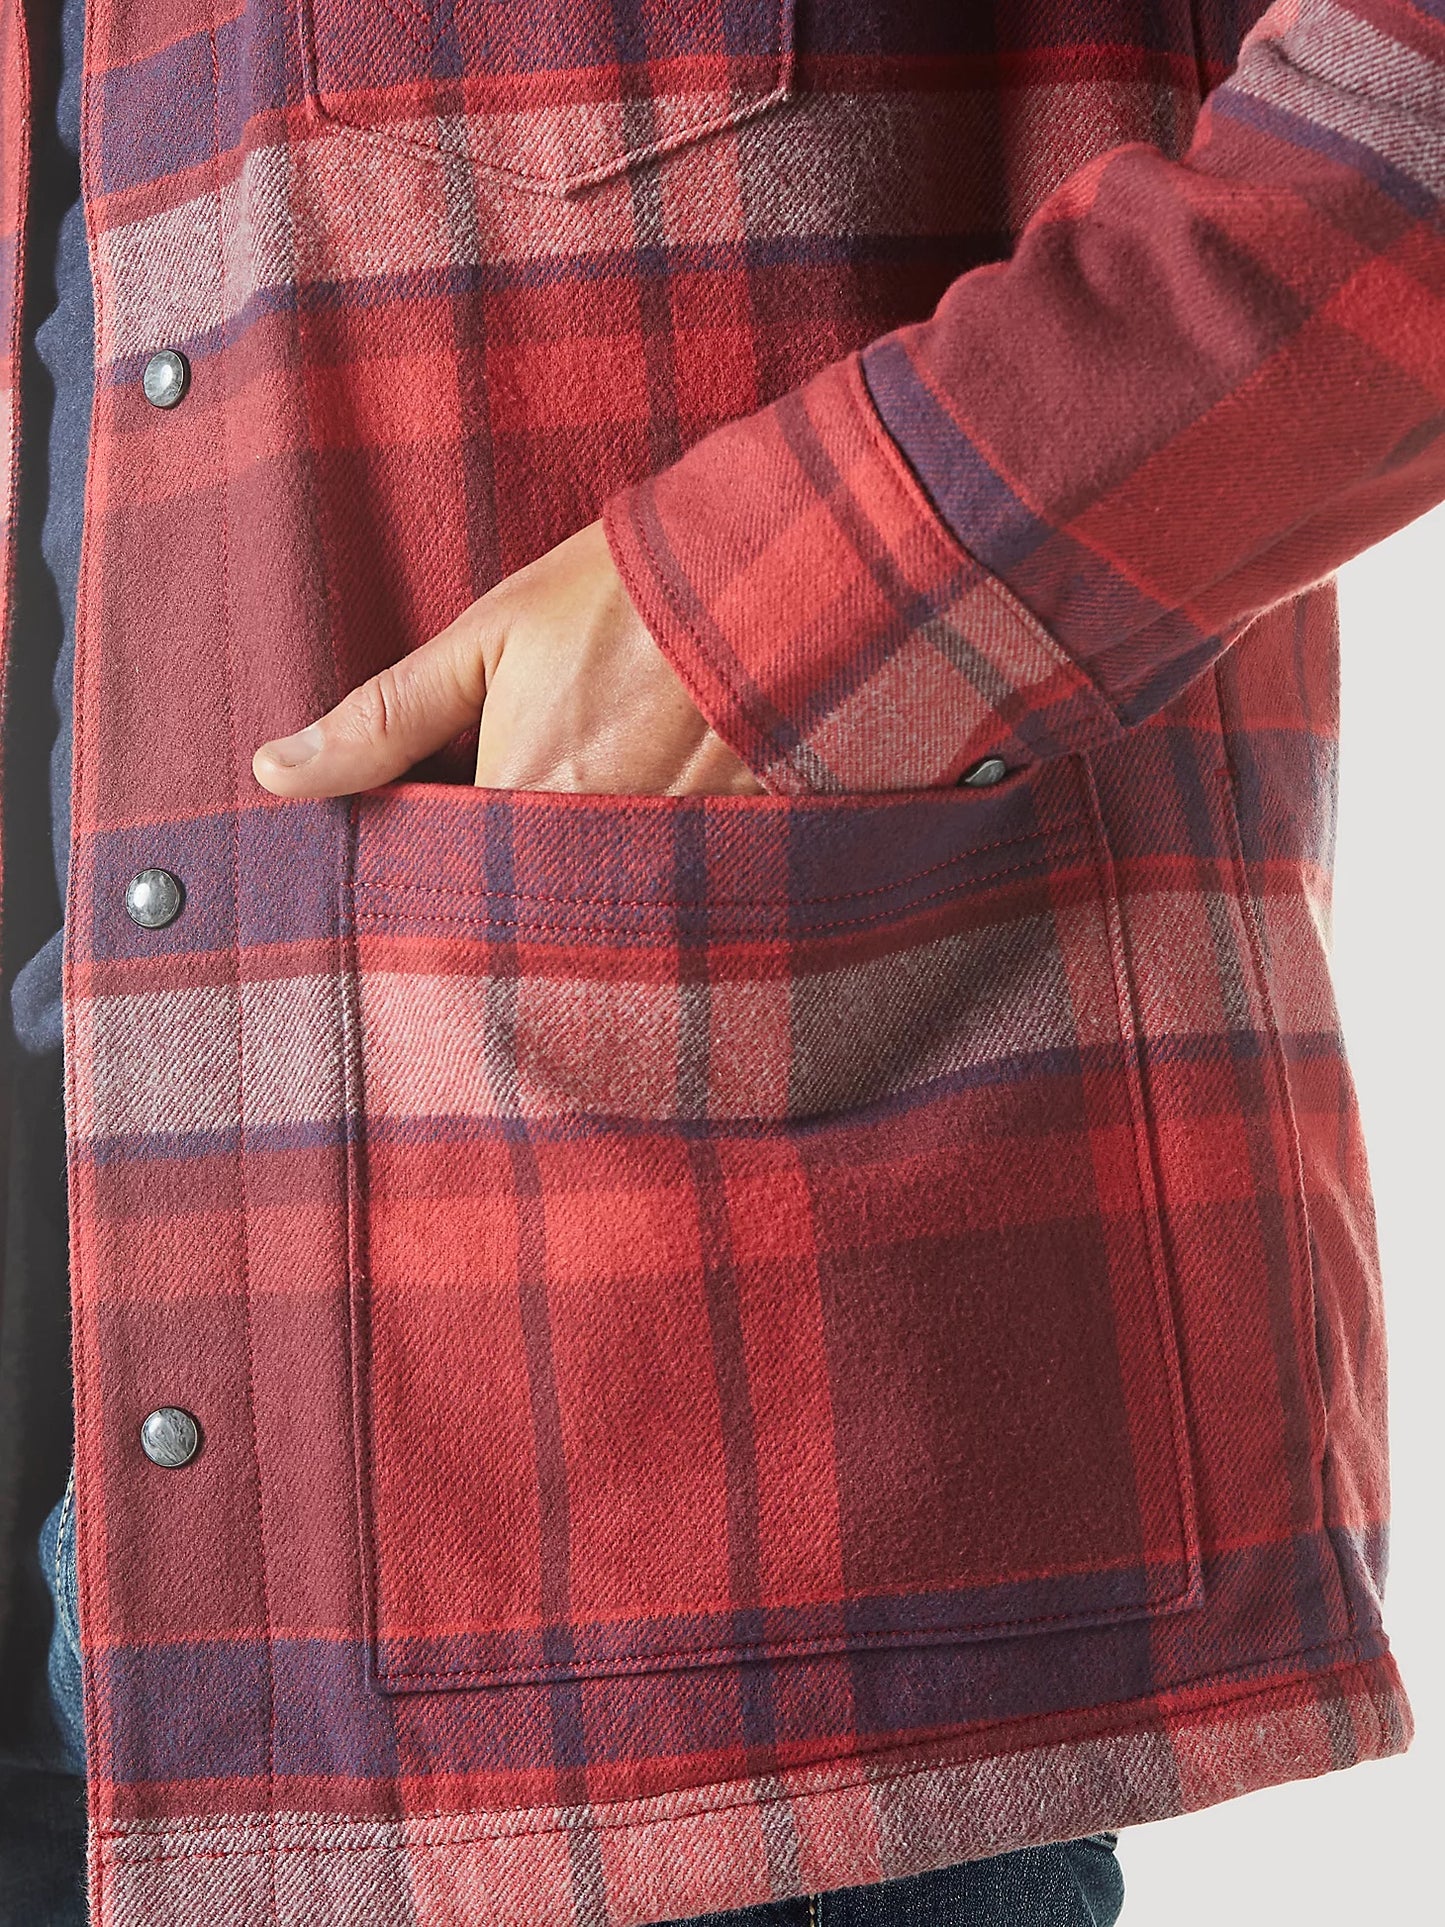 Wrangler Men's Sherpa Lined Flannel Hooded Shirt Jacket in Garnet